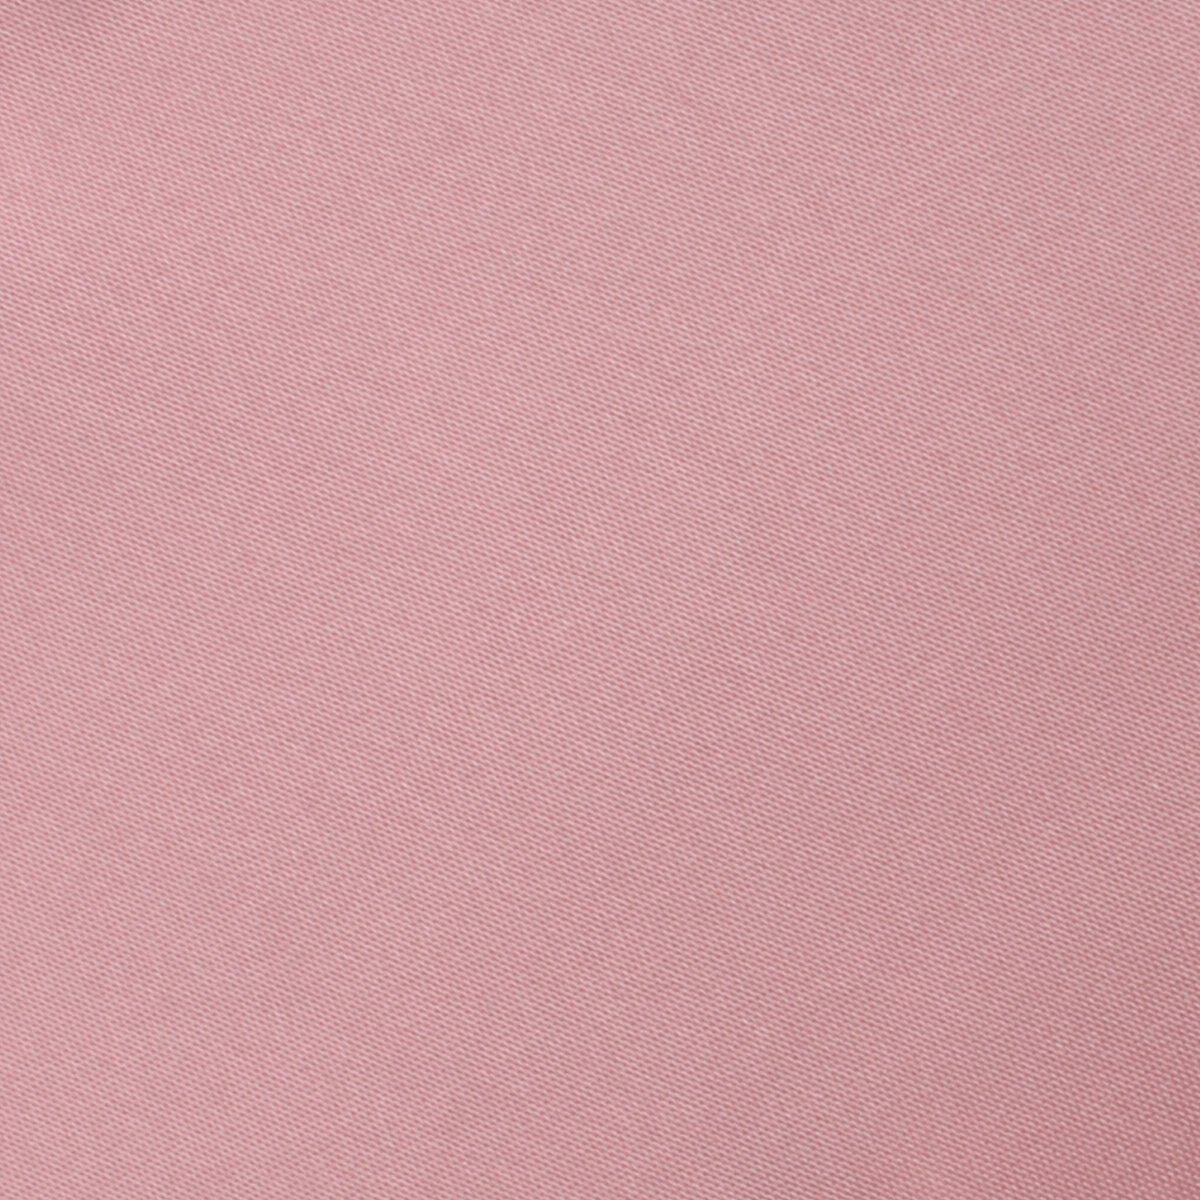 Dusty Blush Pink Satin Fabric Swatch Dusty Blush Pink Satin Fabric Swatch 100 Microfiber Pink